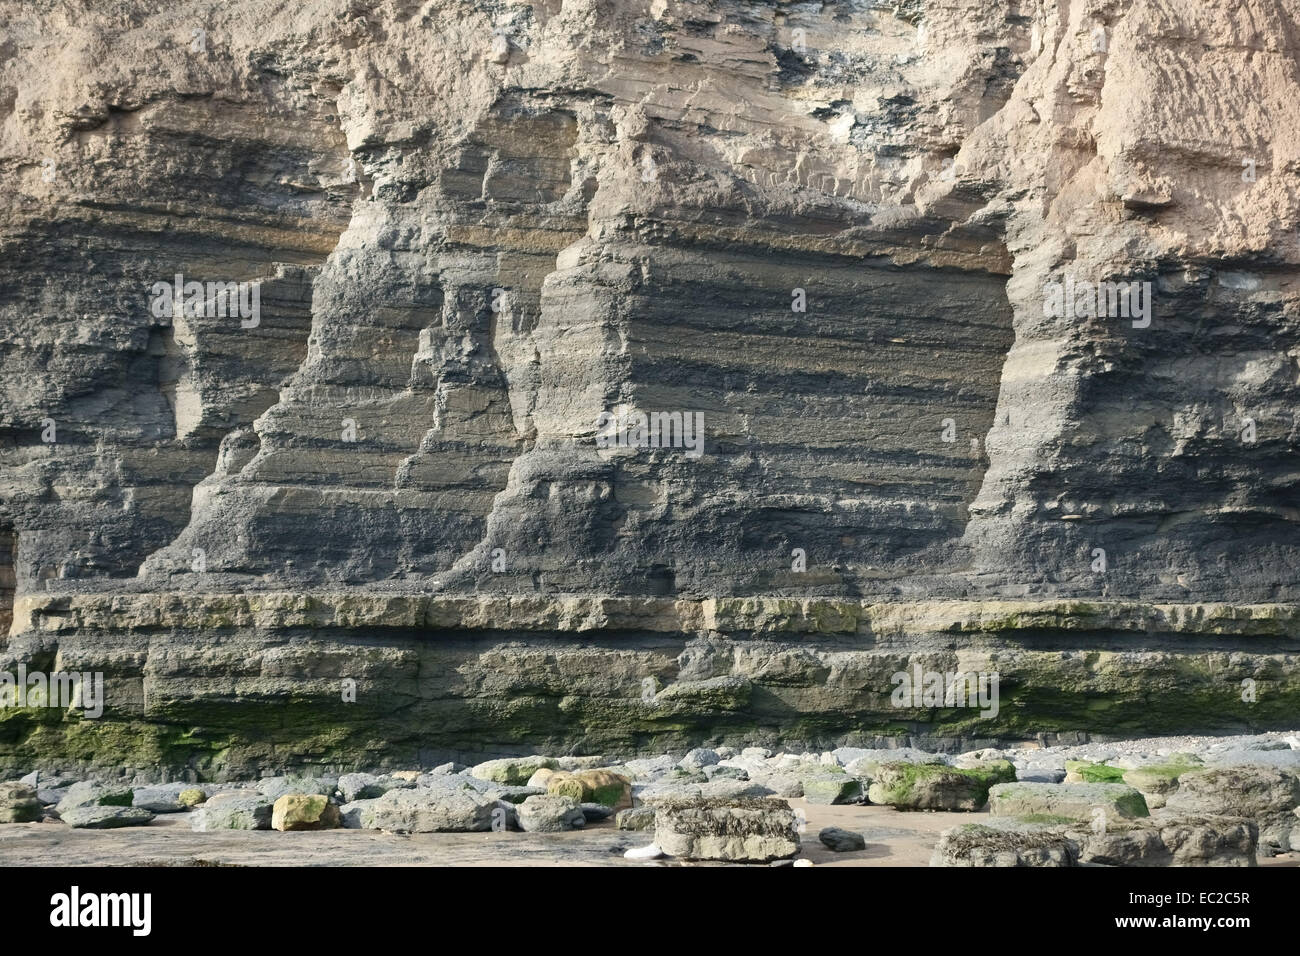 Fossil bearing sedimentary rock strata forming the cliffs at  Robin Hood's Bay, a  coastal bay with a Jurassic cliff coastline, Stock Photo